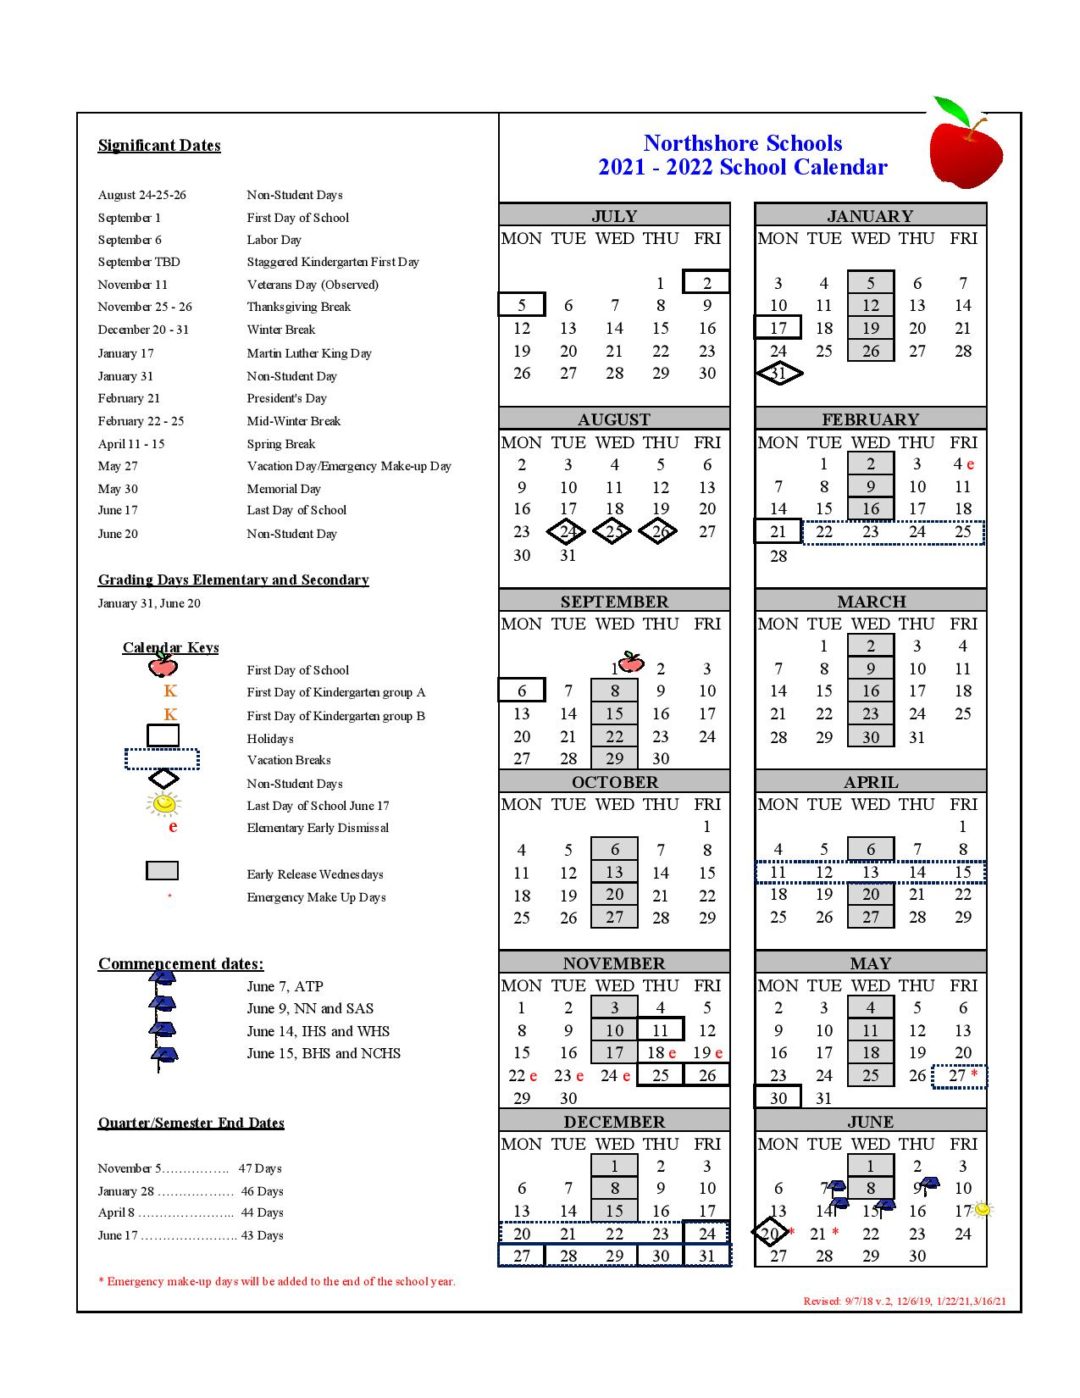 Northshore School District Calendar 2021 2022 Holidays